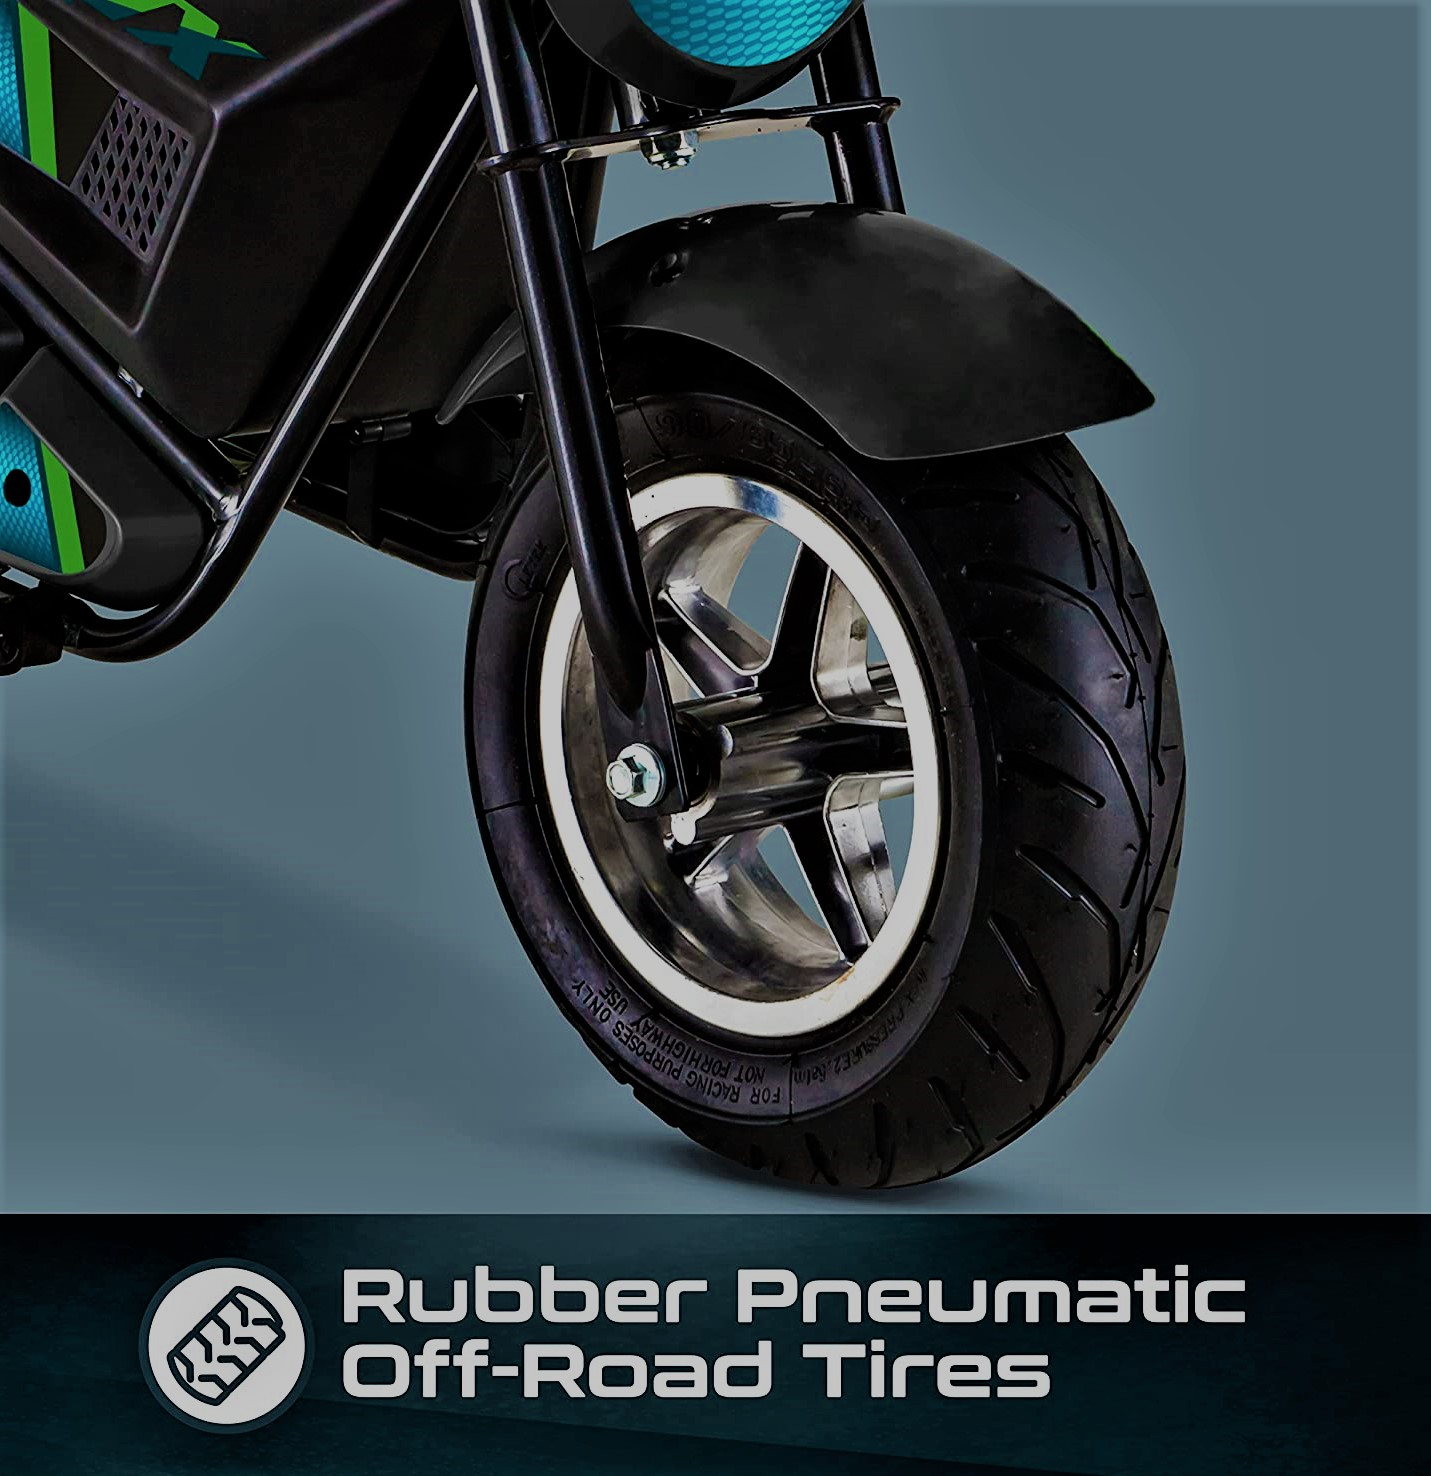 Kid Trax Mini Electric Bike Rubber Pneumatic Fat Tire